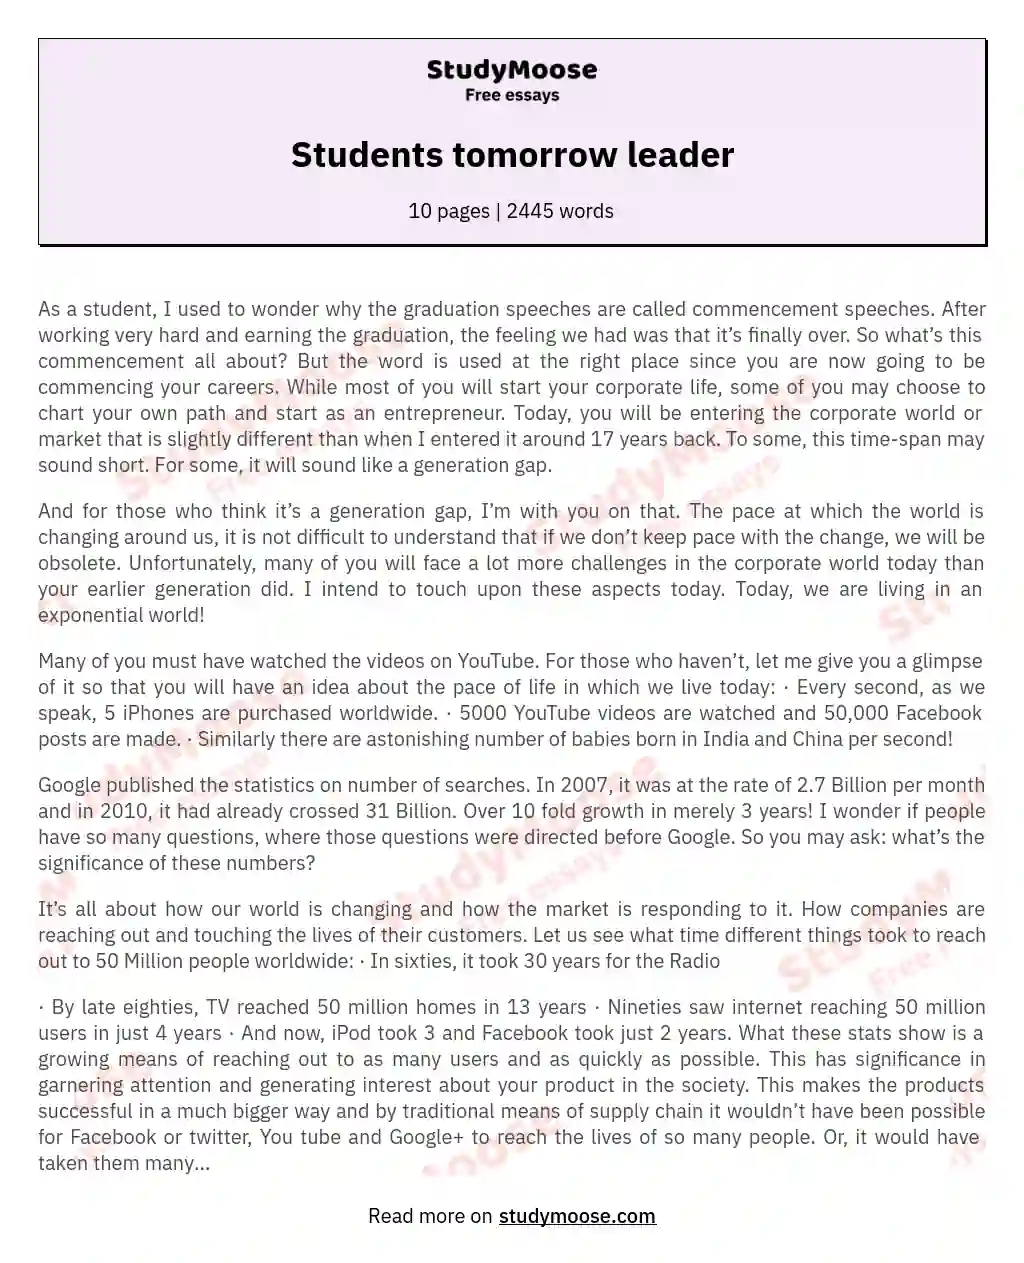 Students tomorrow leader essay